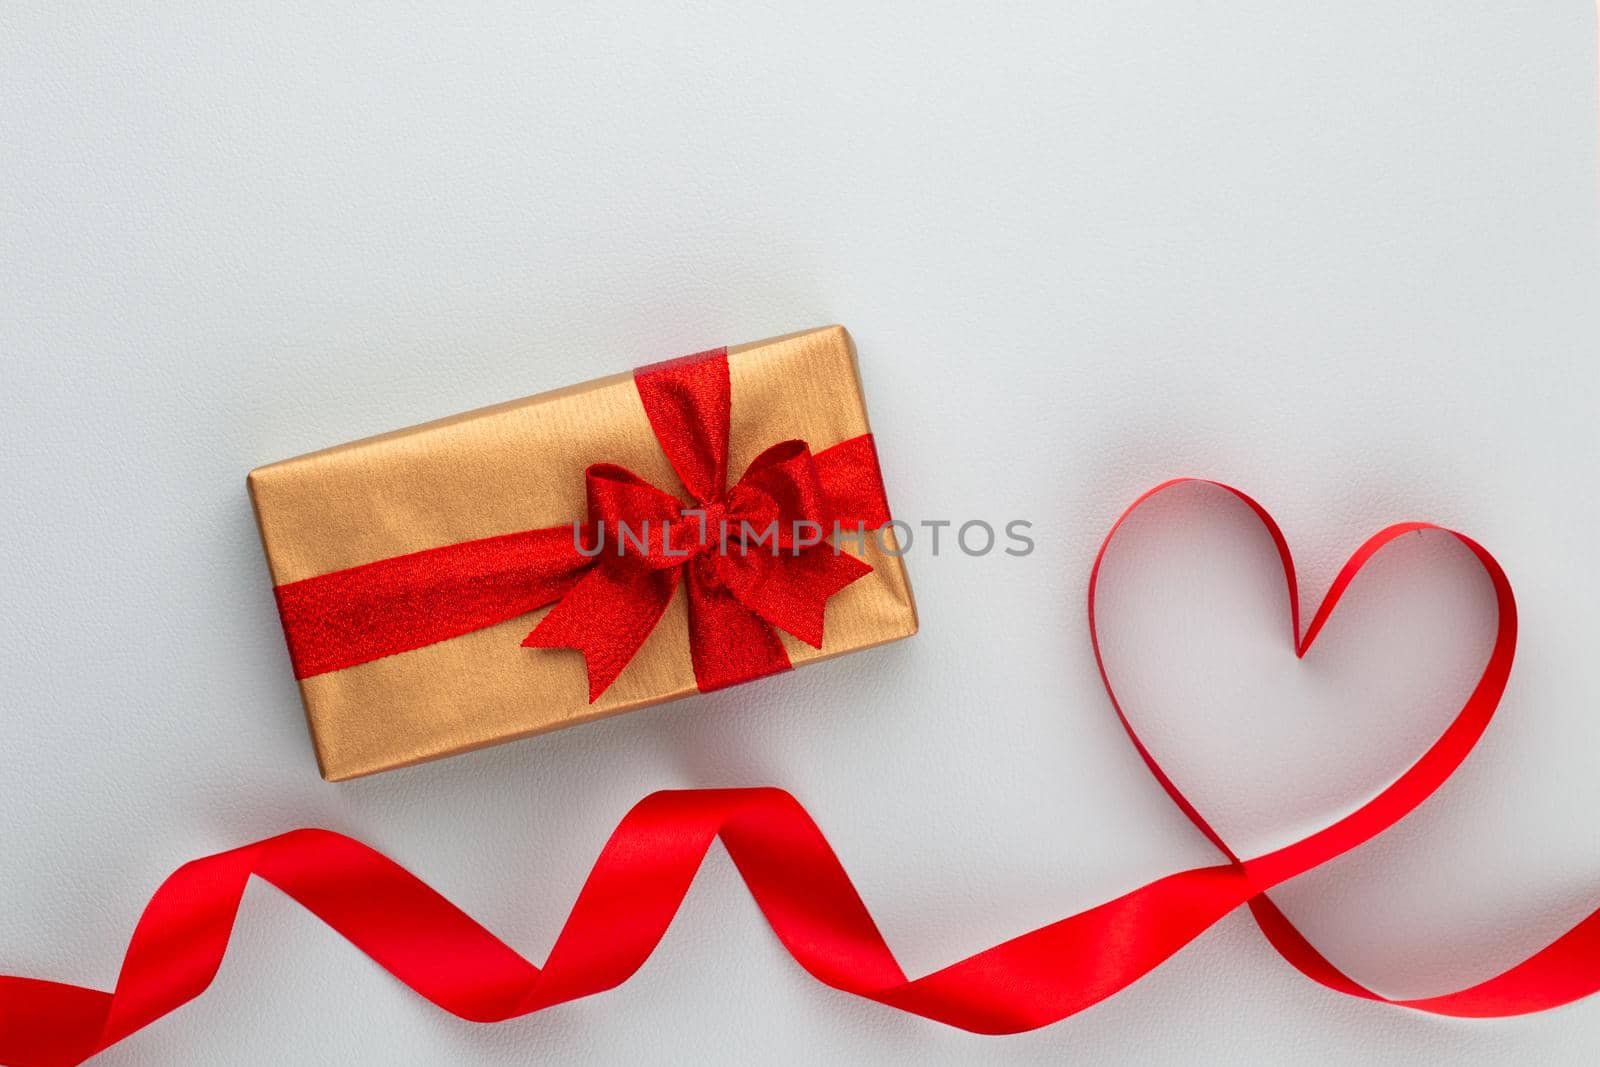 Red rose heart shaped. Valentine or Wedding background. by gitusik